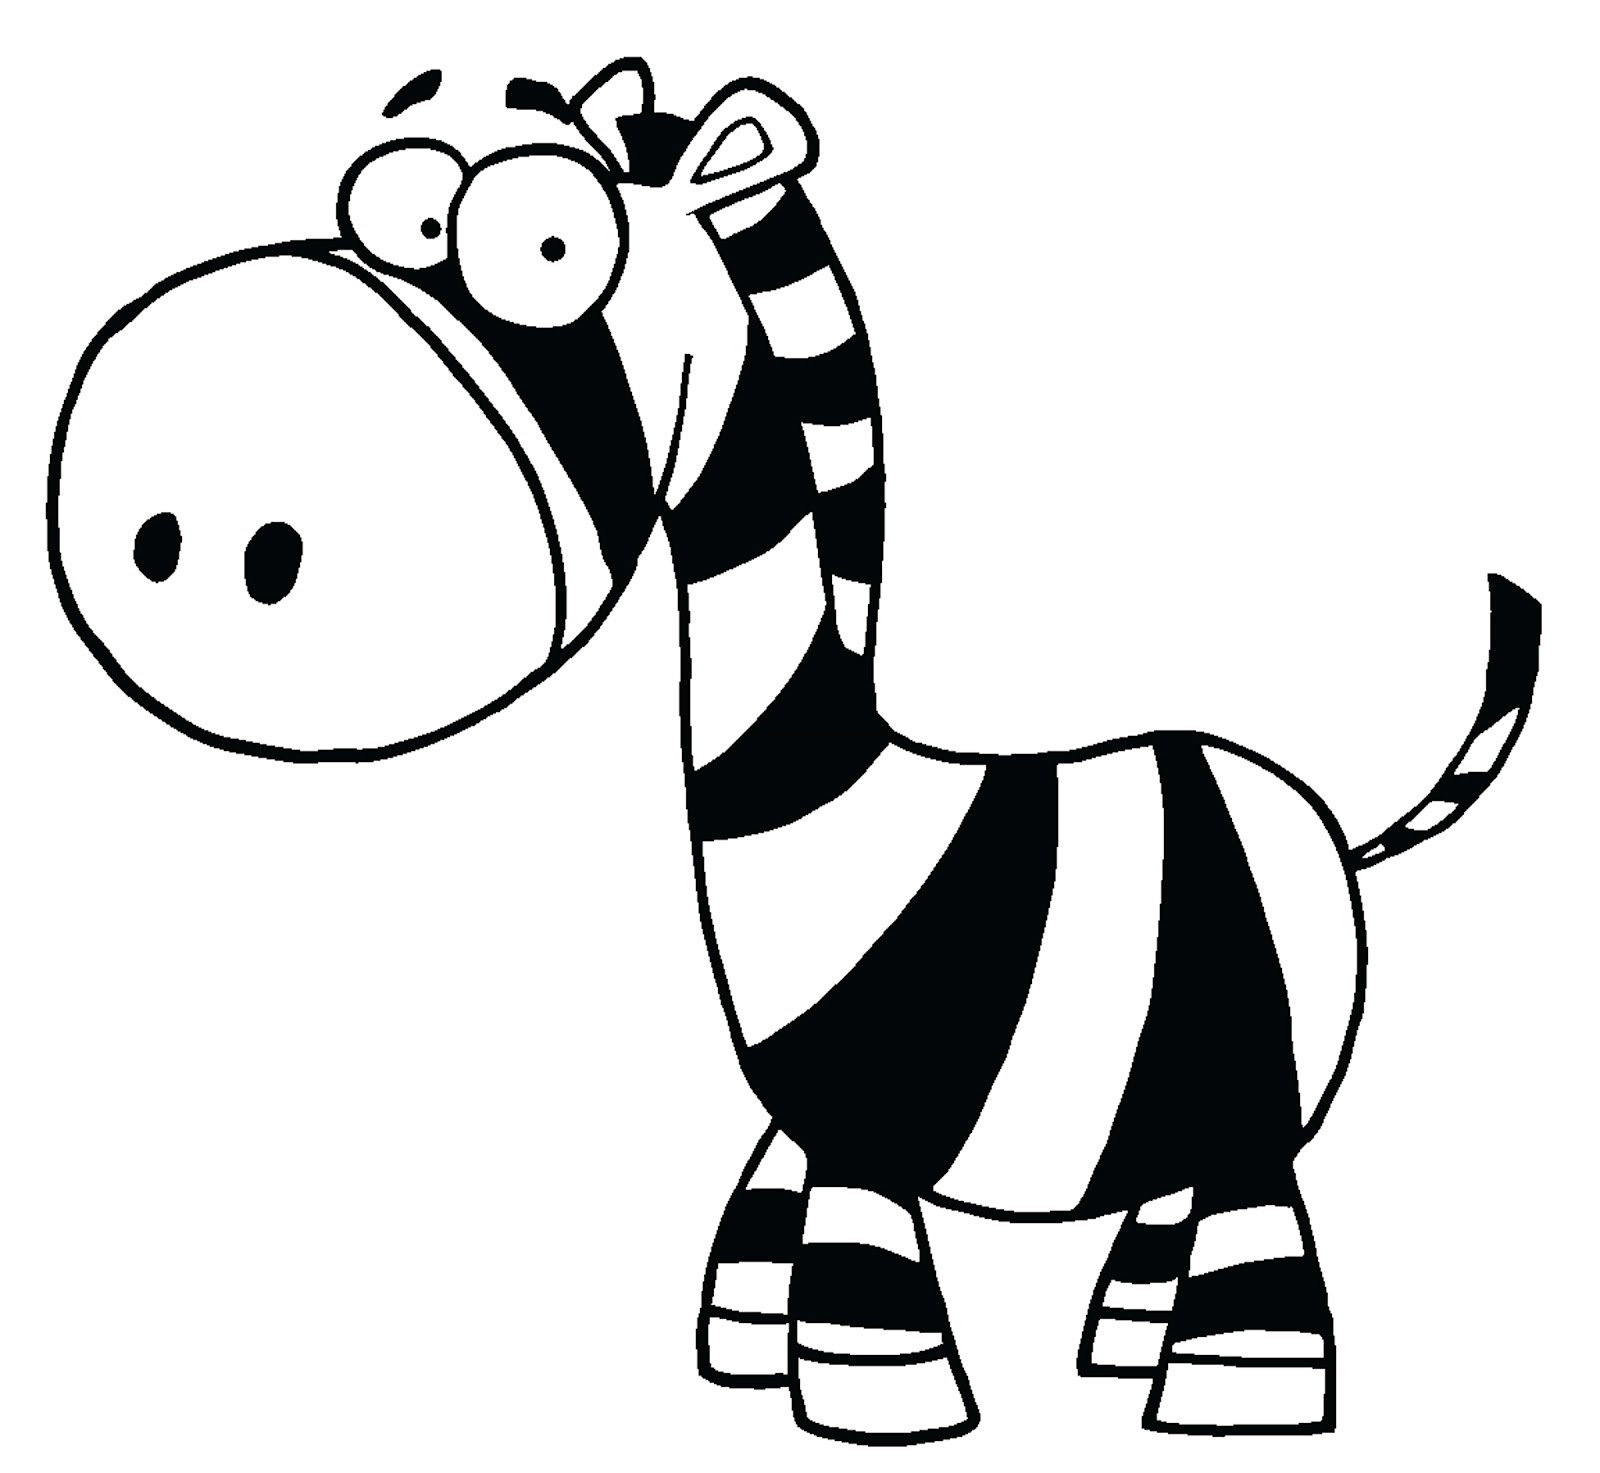 Correspondence Concerning the Carcinoids: Zebras